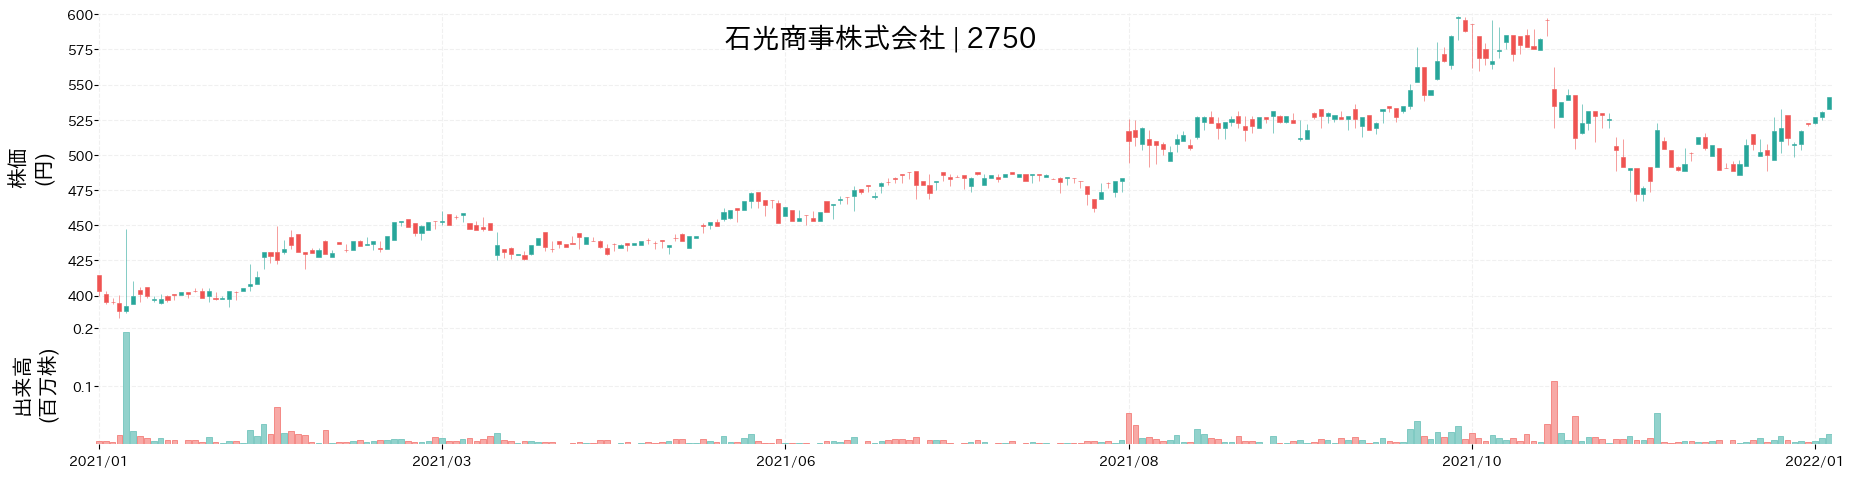 石光商事の株価推移(2021)